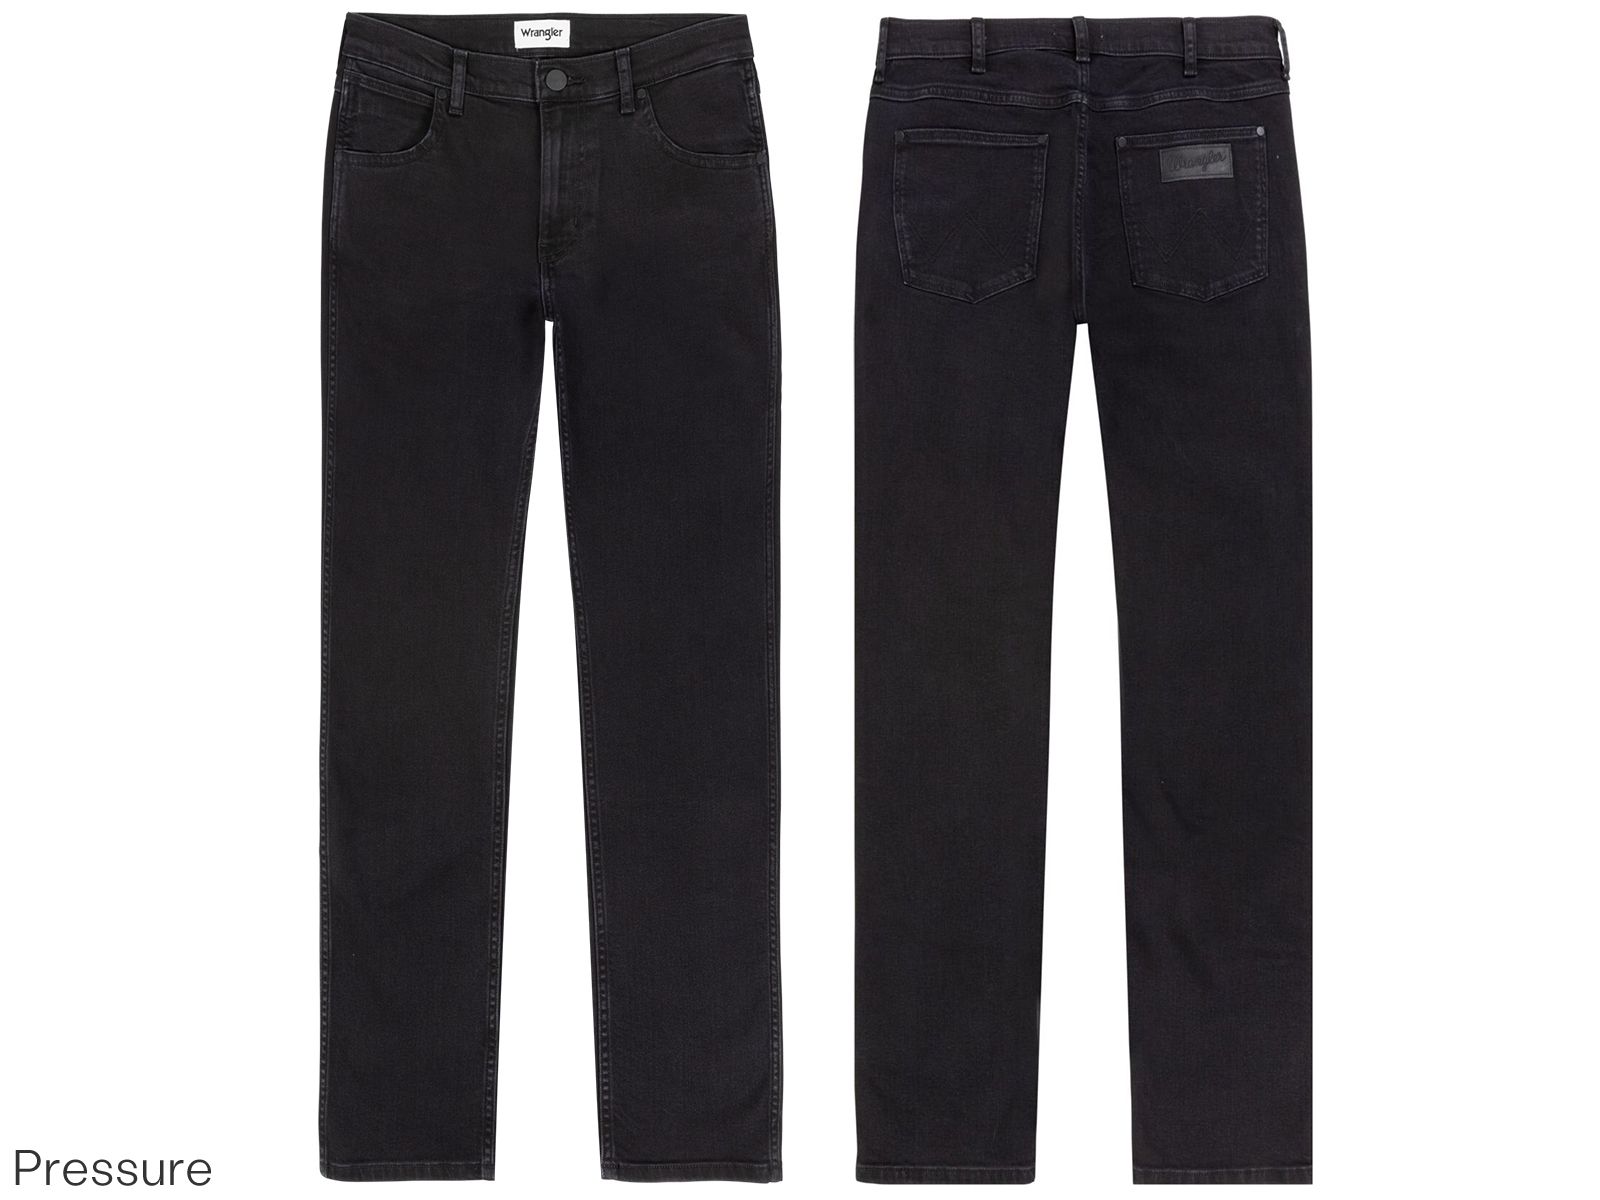 wrangler-greensboro-jeans-herren